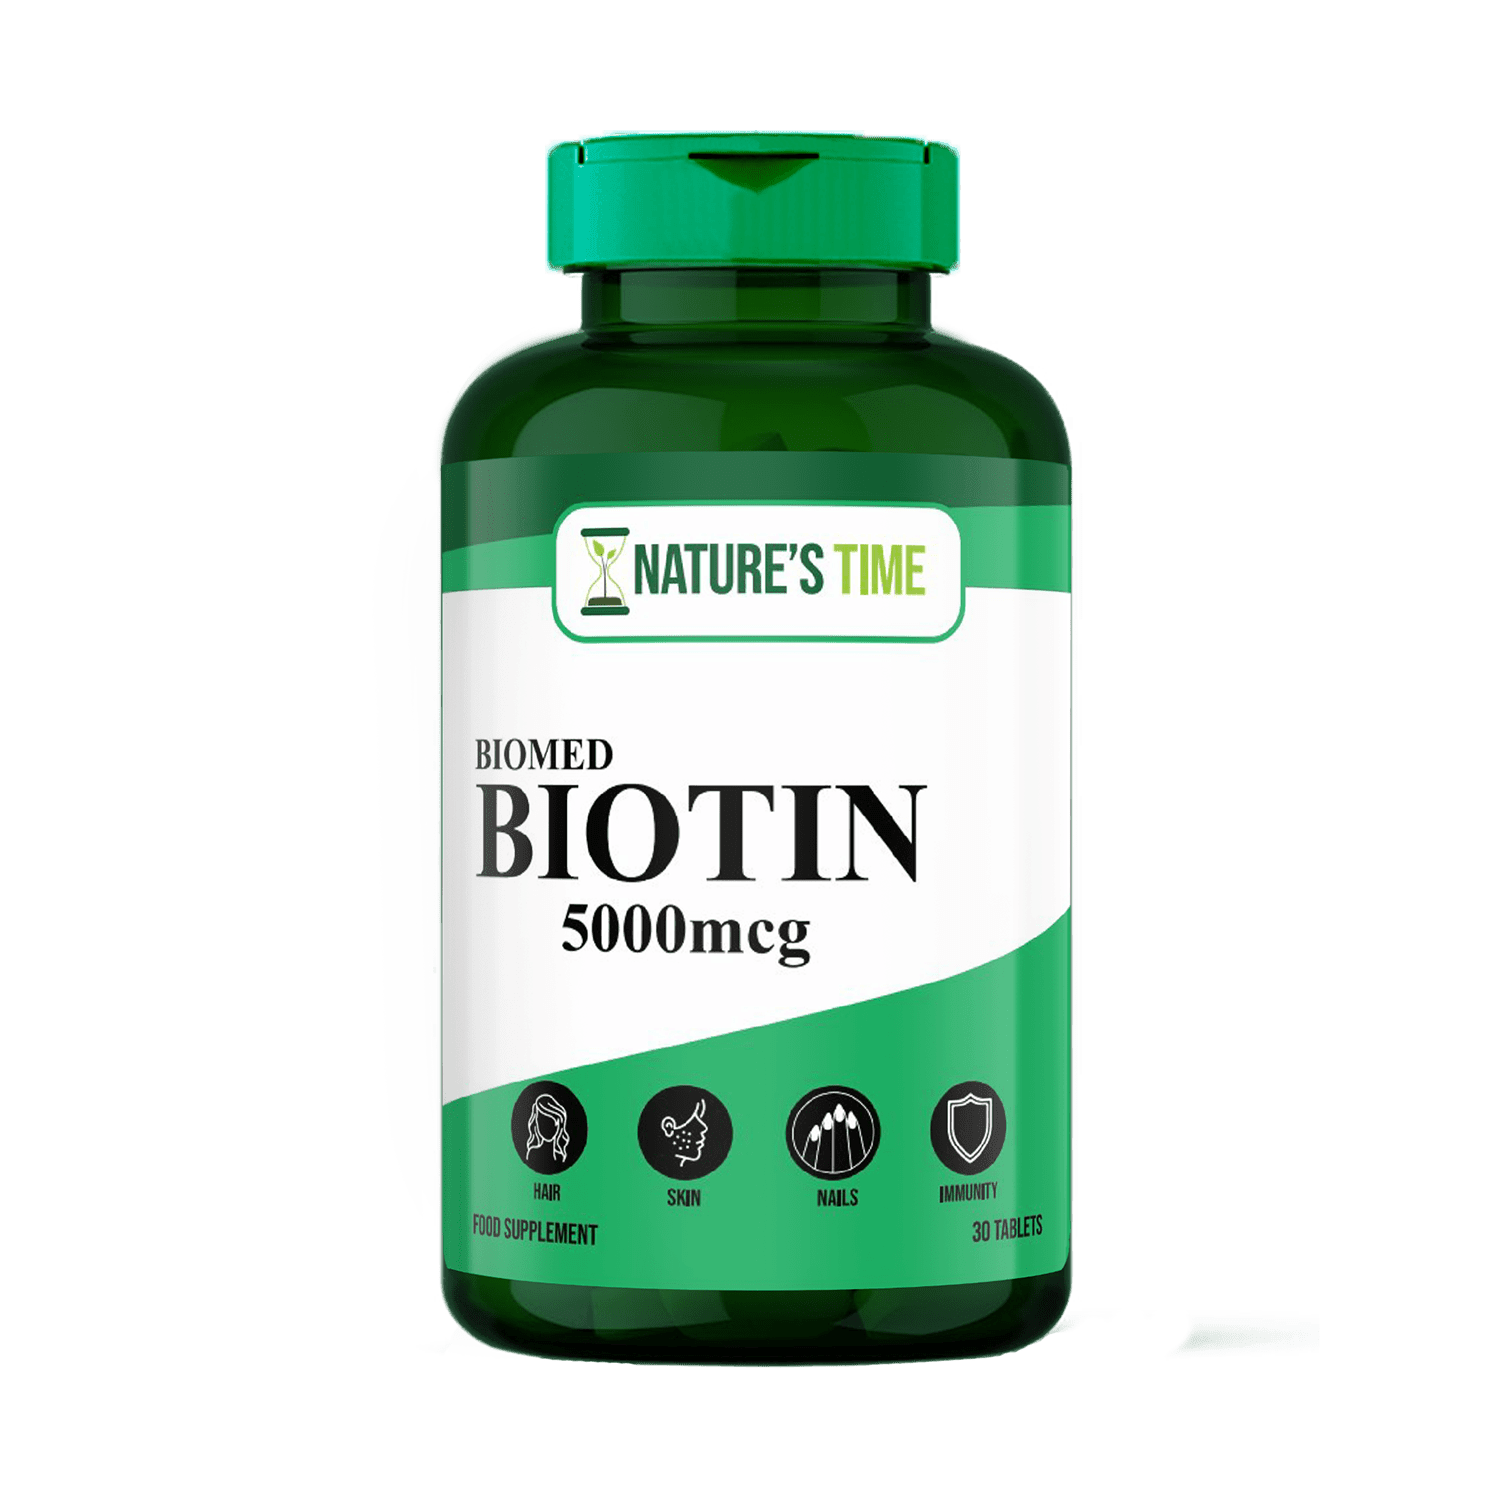 Biomed - Biotin 5000mcg - Healthifyme.pk